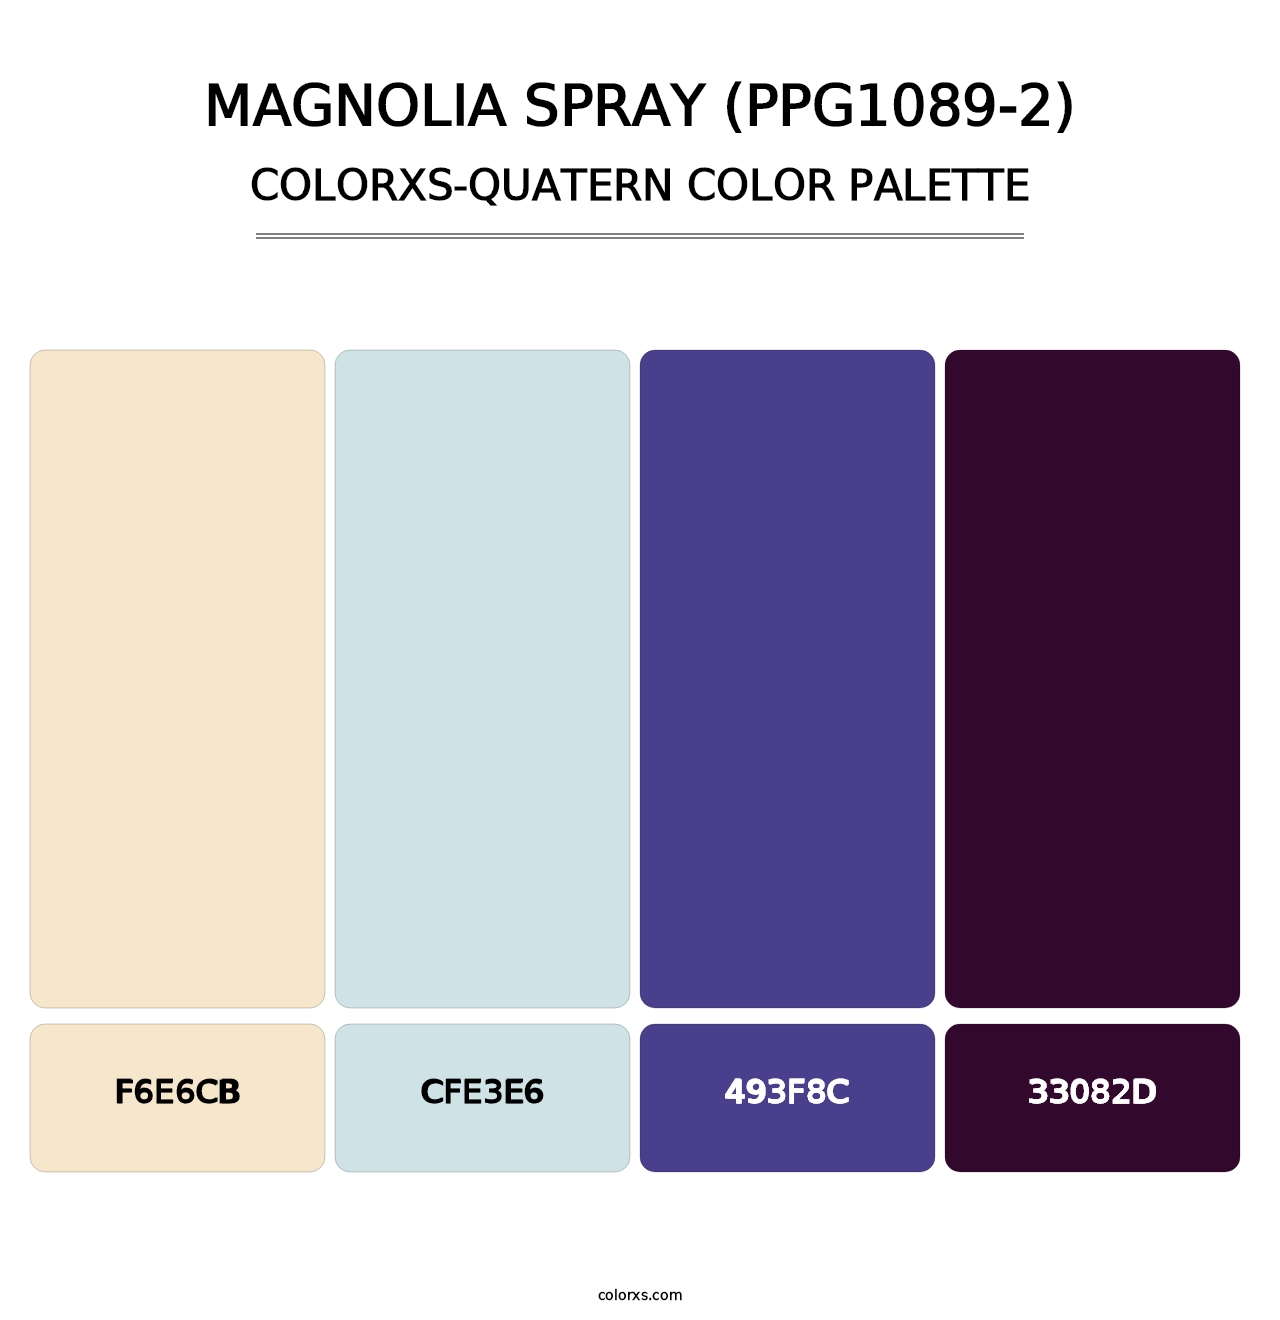 Magnolia Spray (PPG1089-2) - Colorxs Quatern Palette